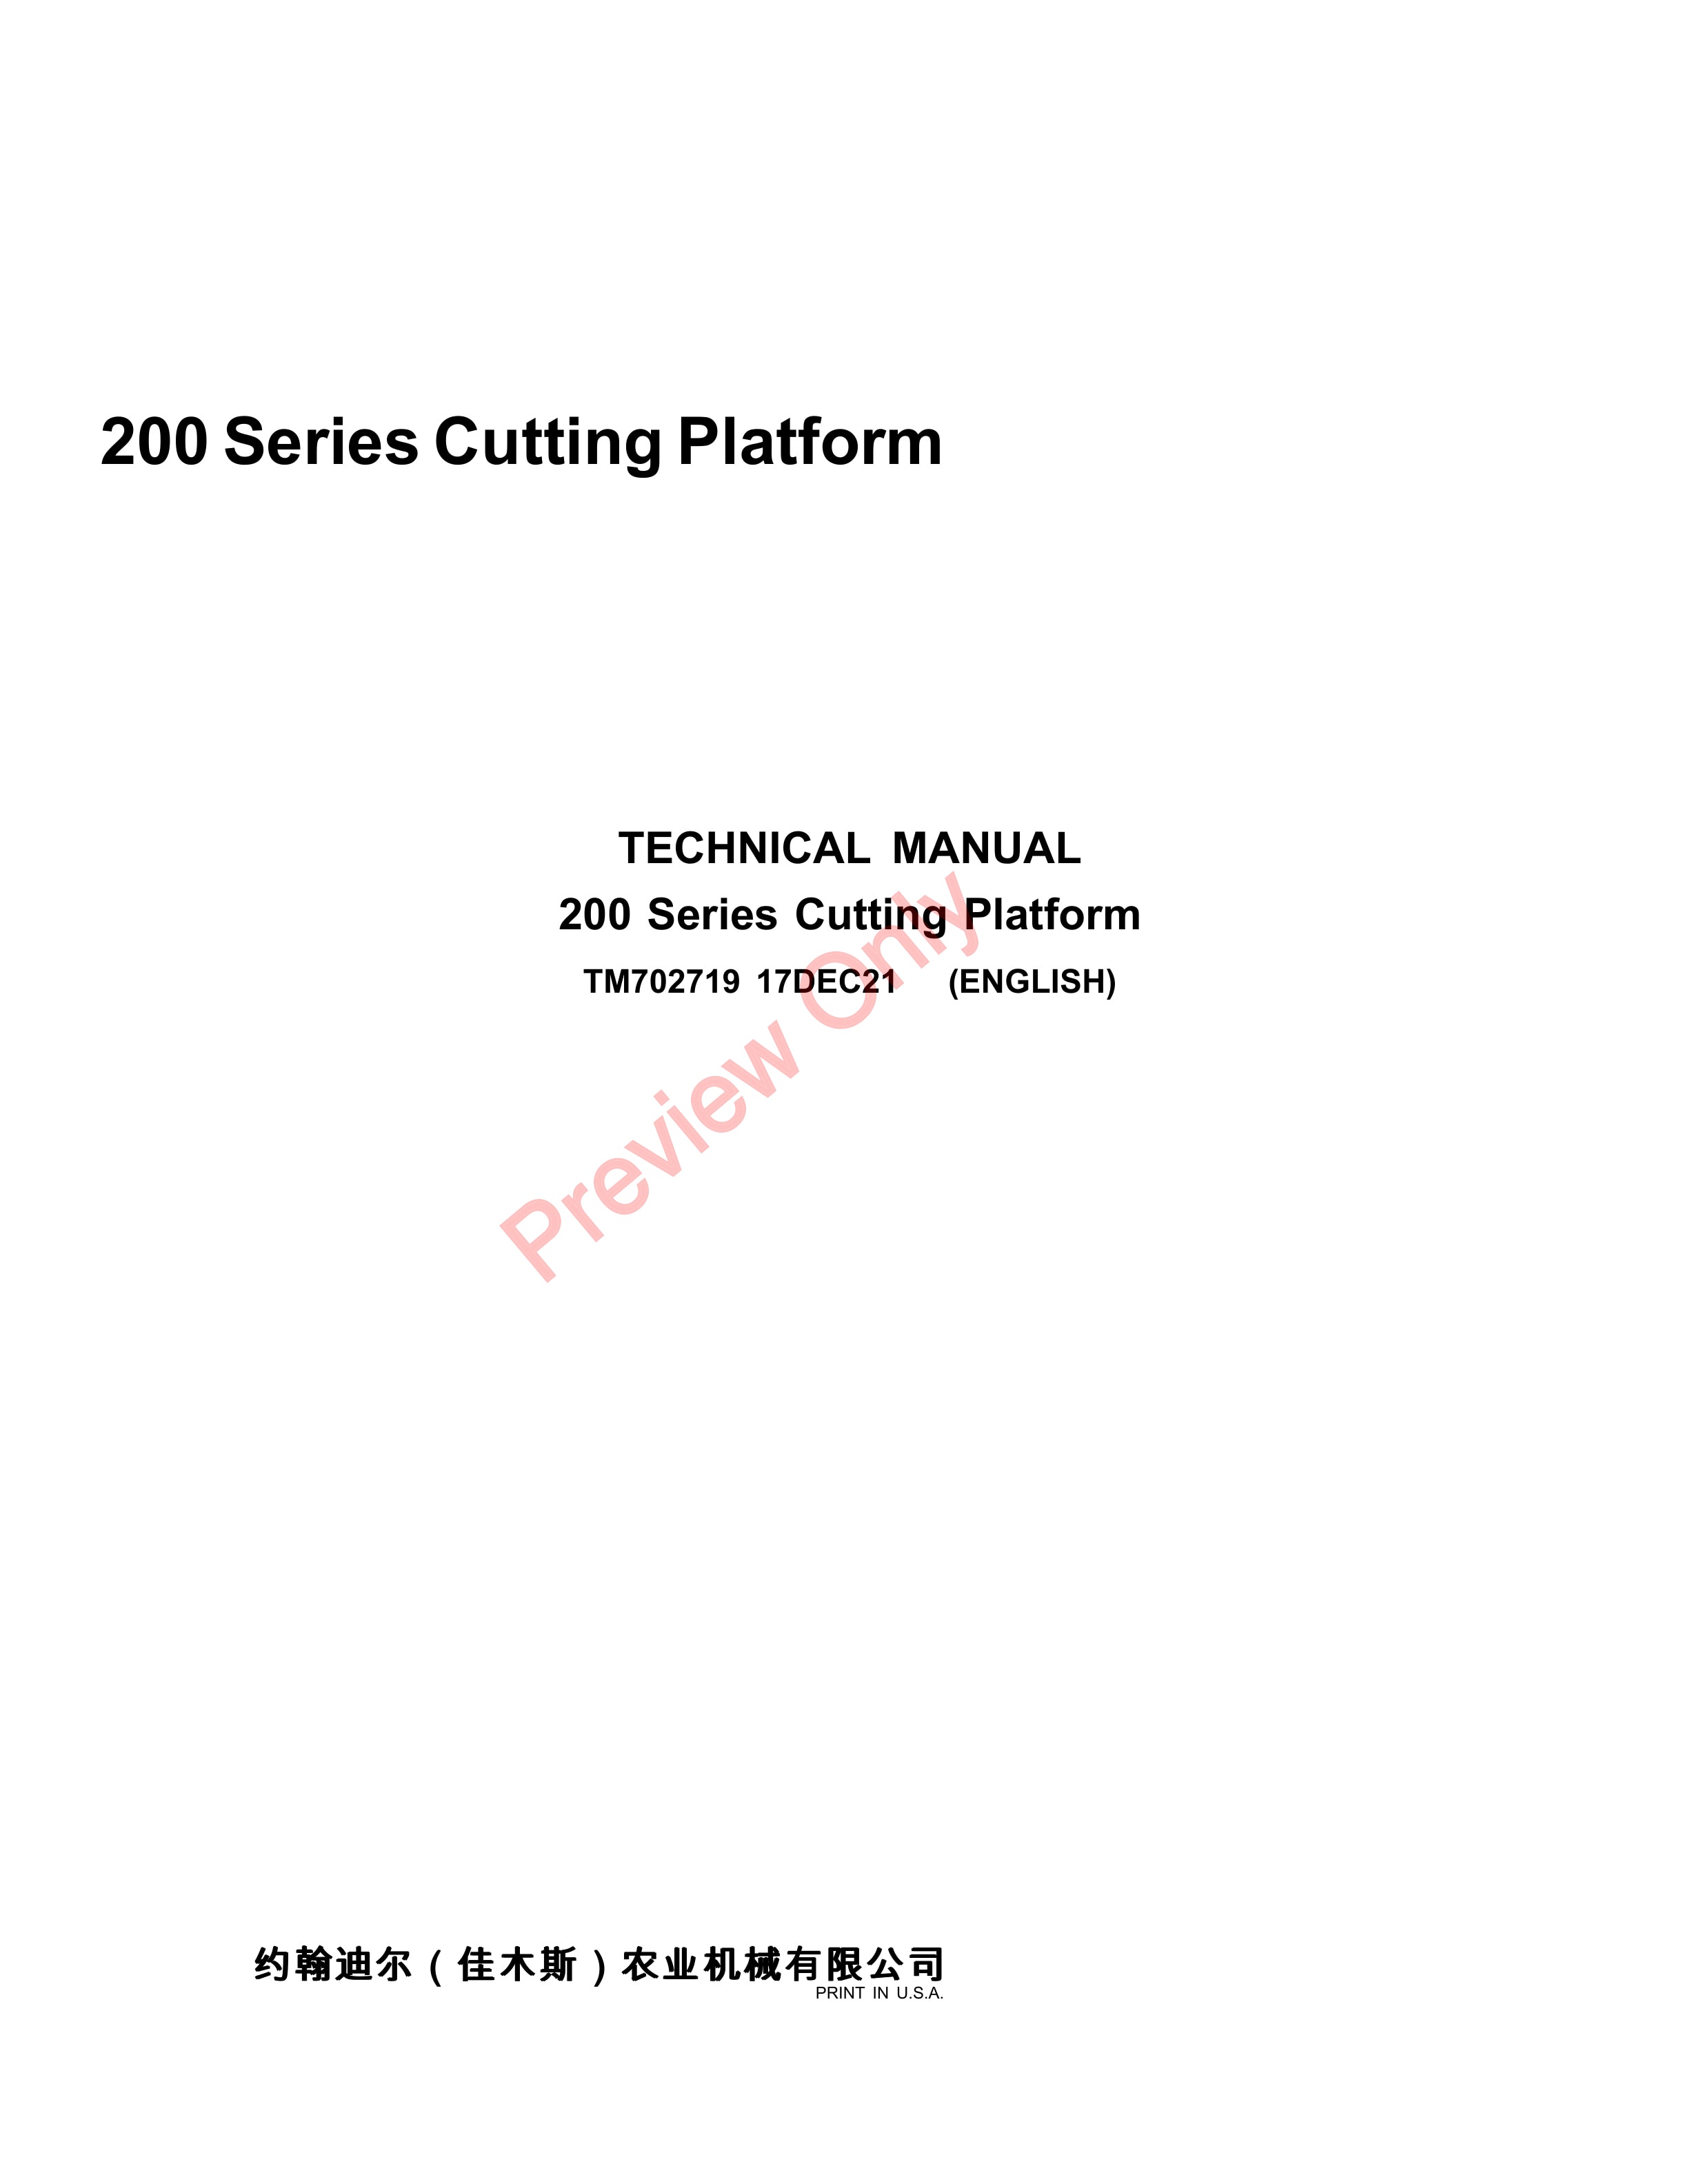 John Deere 200 Series Cutting Platform Technical Manual TM702719 17DEC21 1